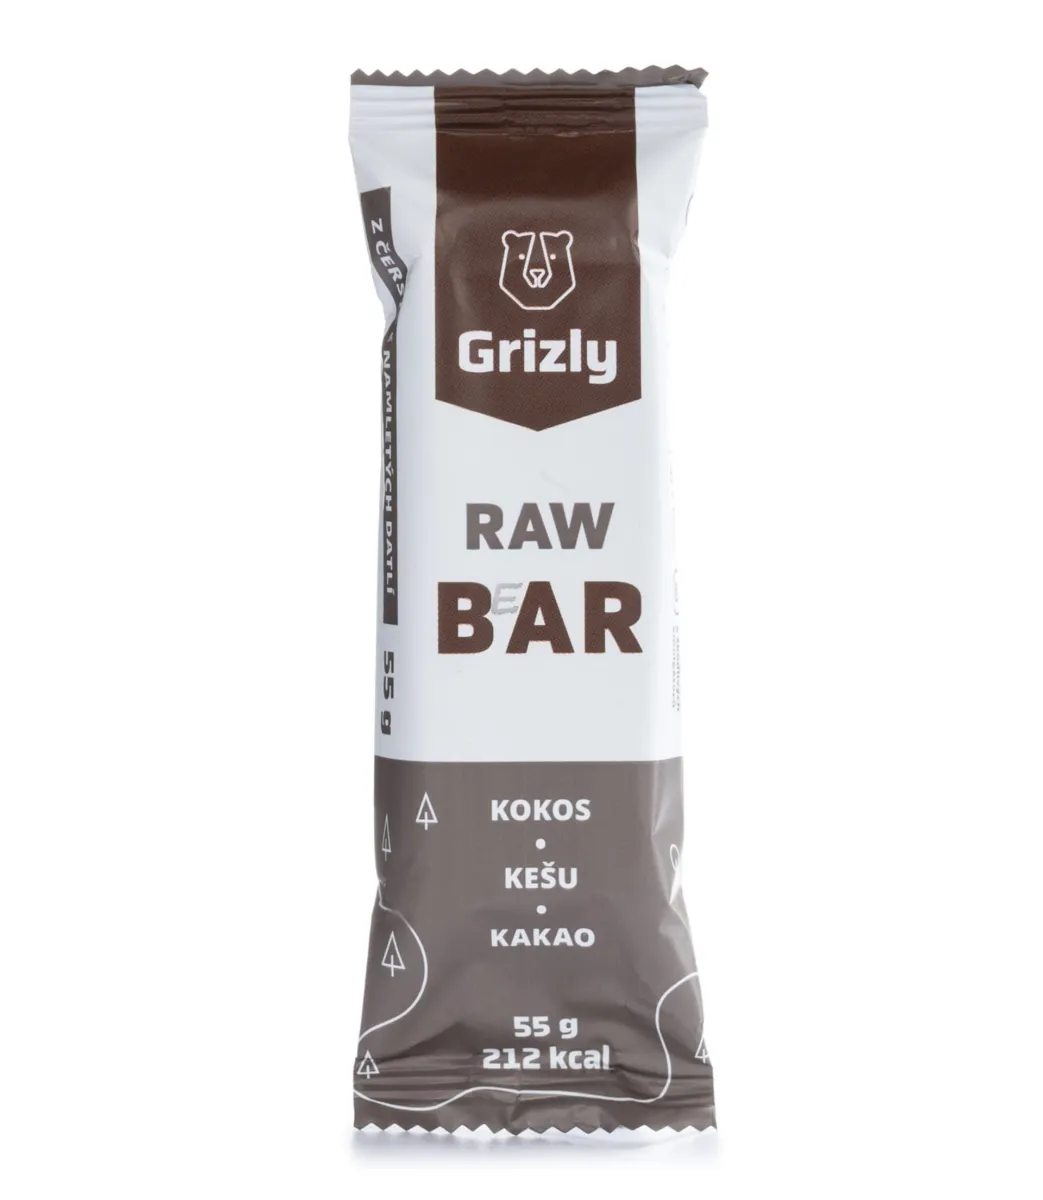 Grizly Raw Bar kokos, kešu, kakao tyčinka 55 g